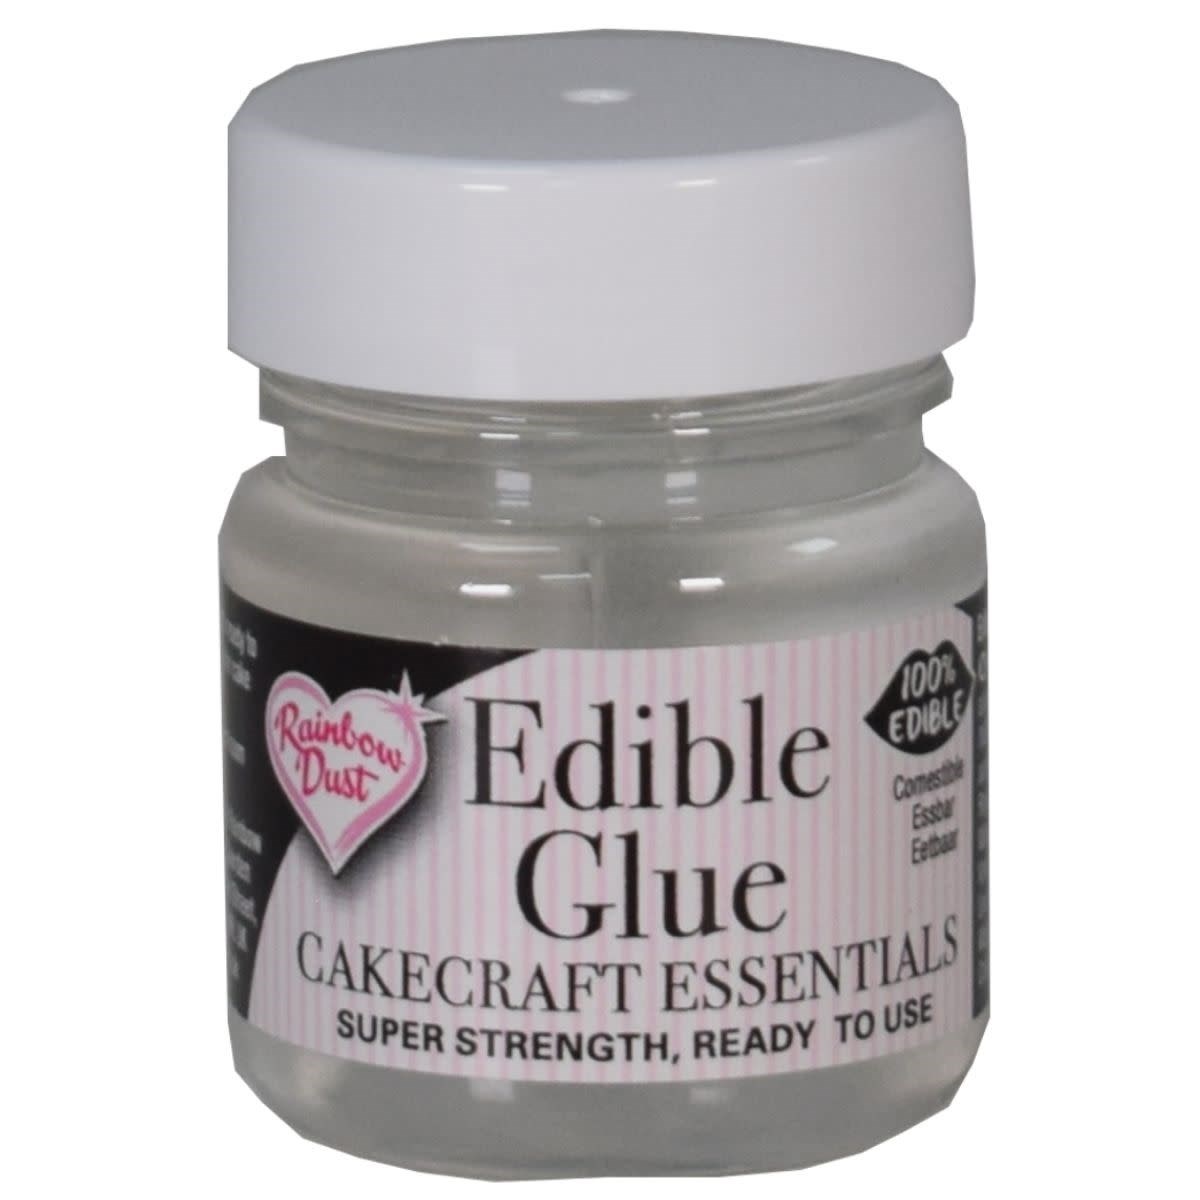 Edible Glue for Cake Decorating - CraftNCake - 5g or 25g Pot - UK Stockist